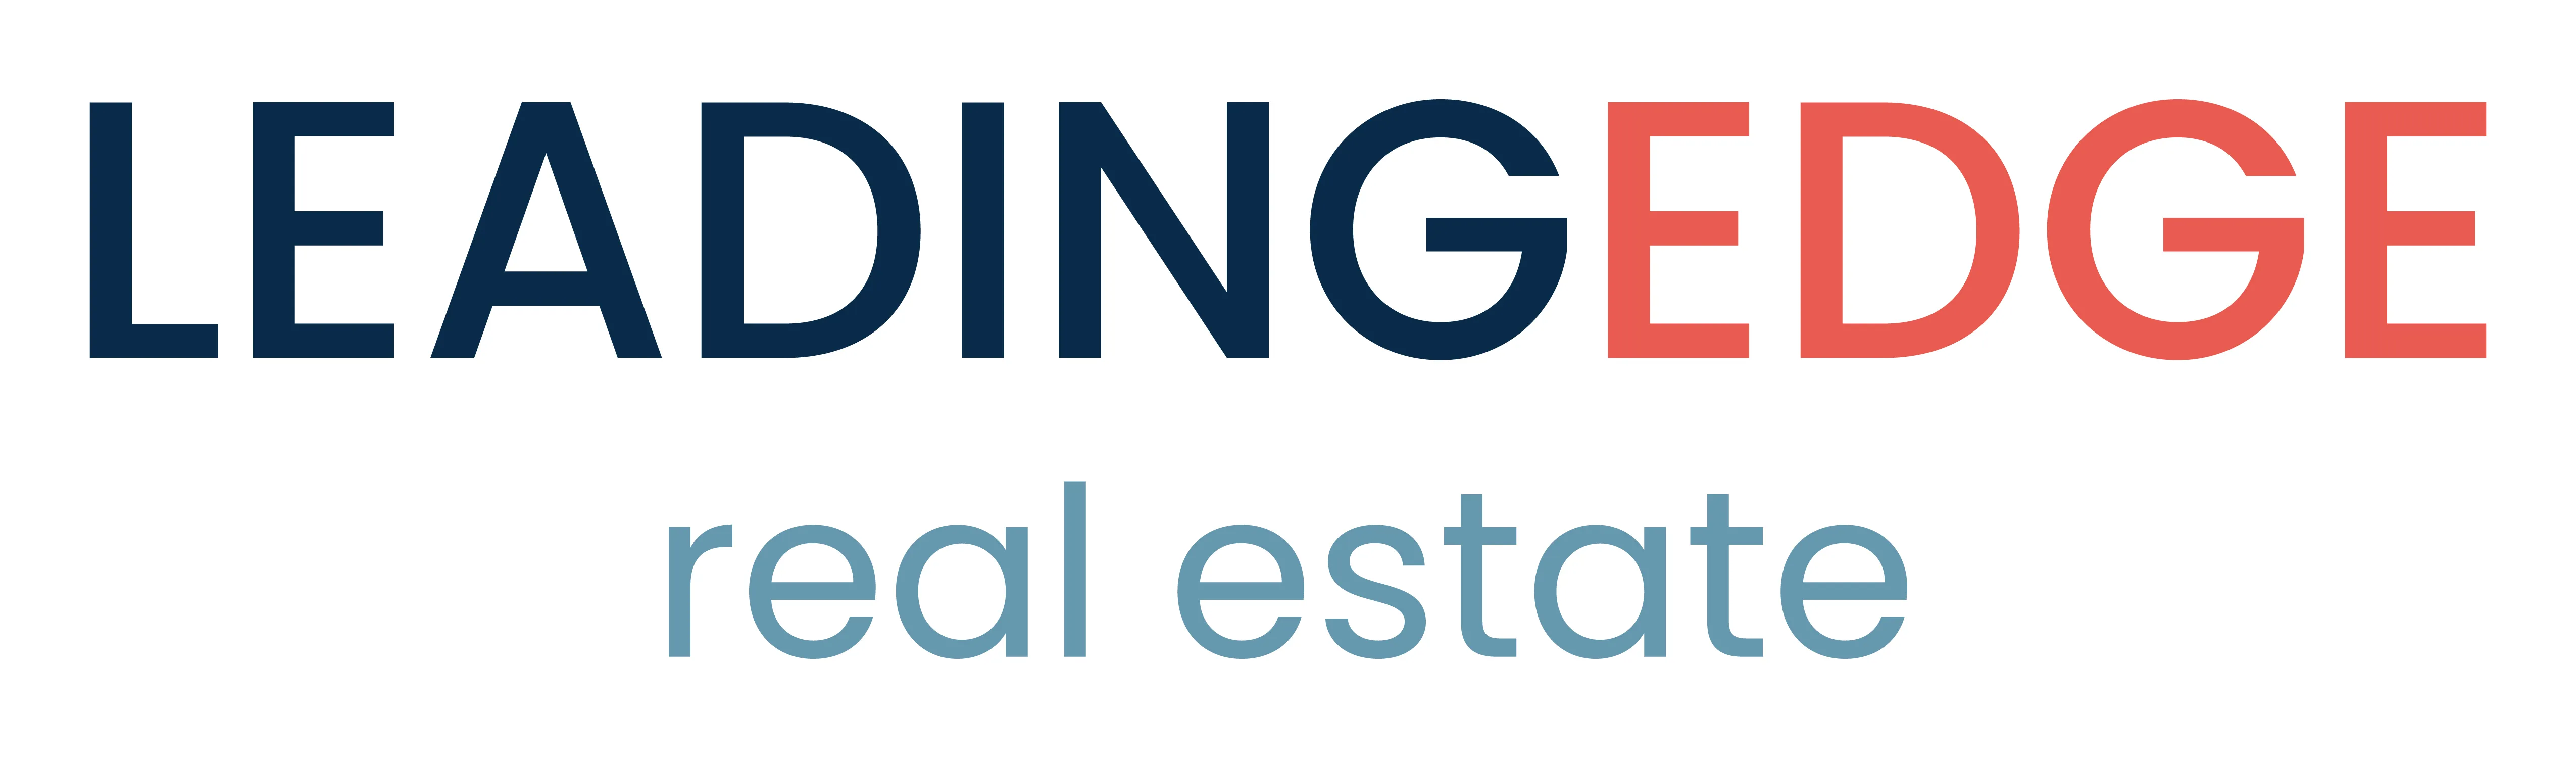 Leading Edge Real Estate logo